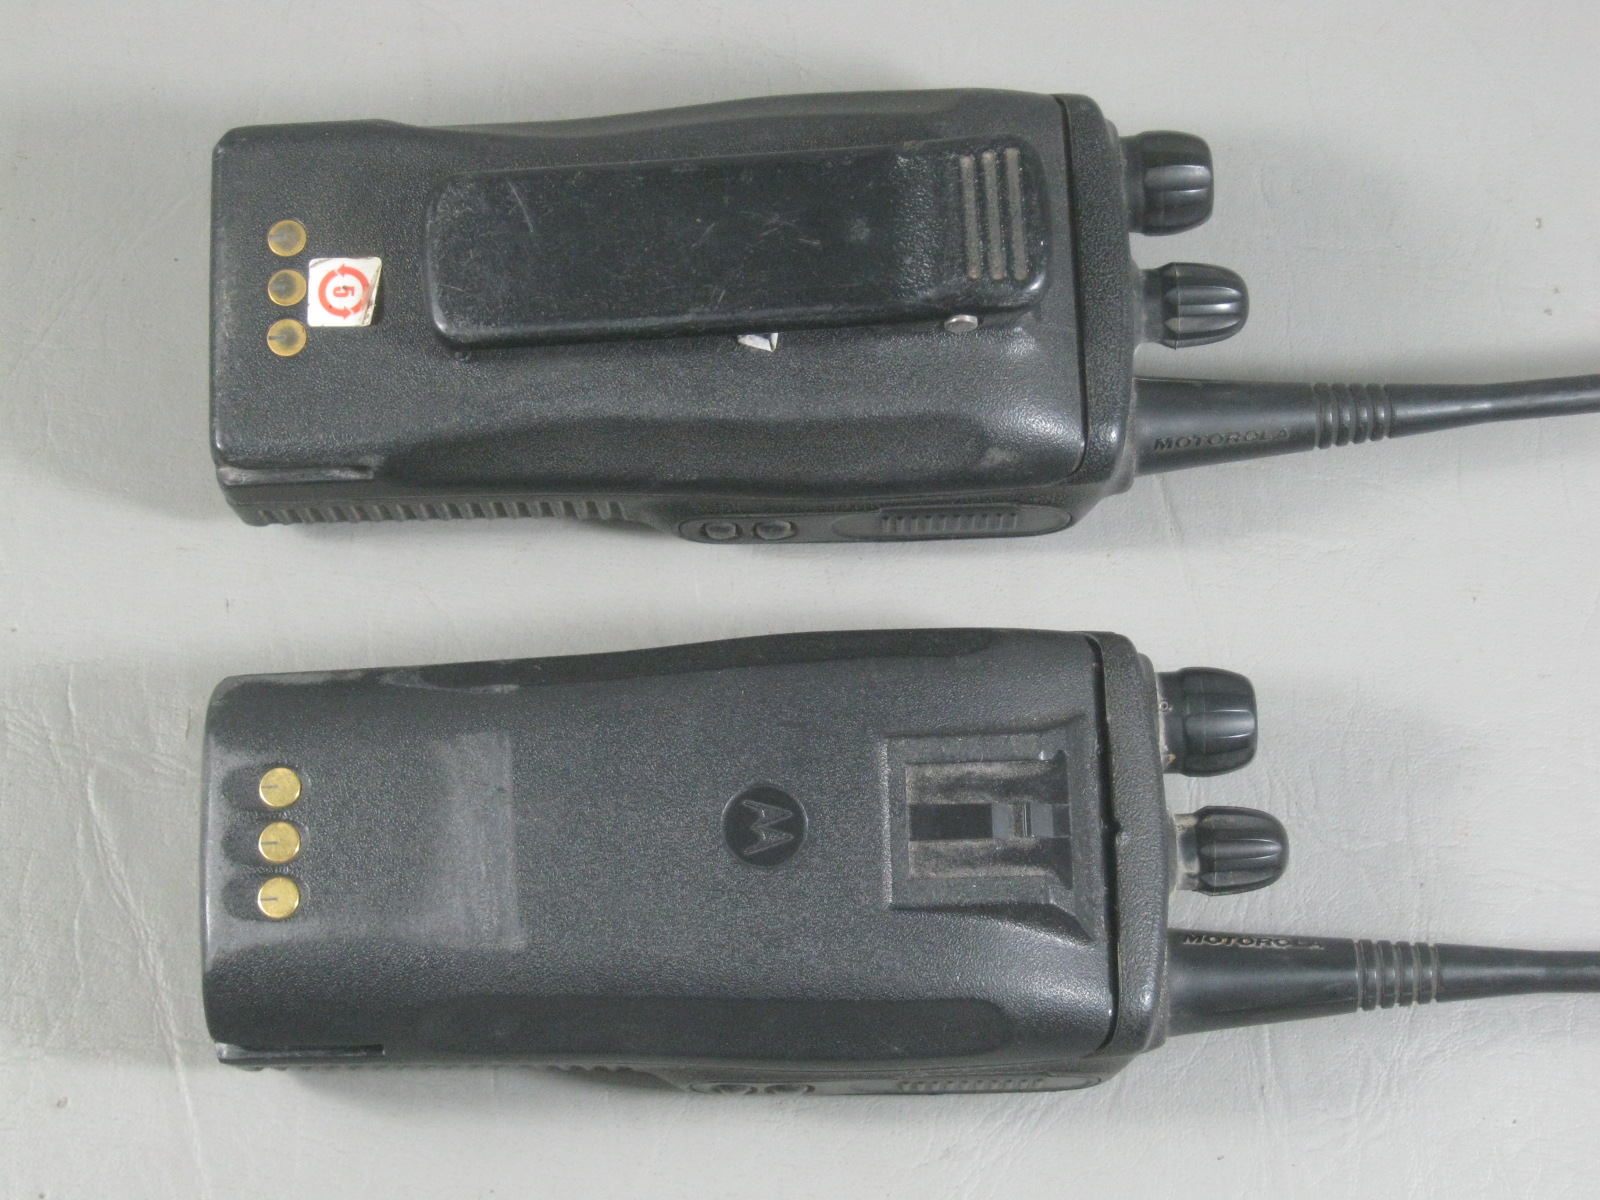 2 Motorola Radius CP150 UHF Narrow Band 2-Way Commercial Radios Tested + Working 4